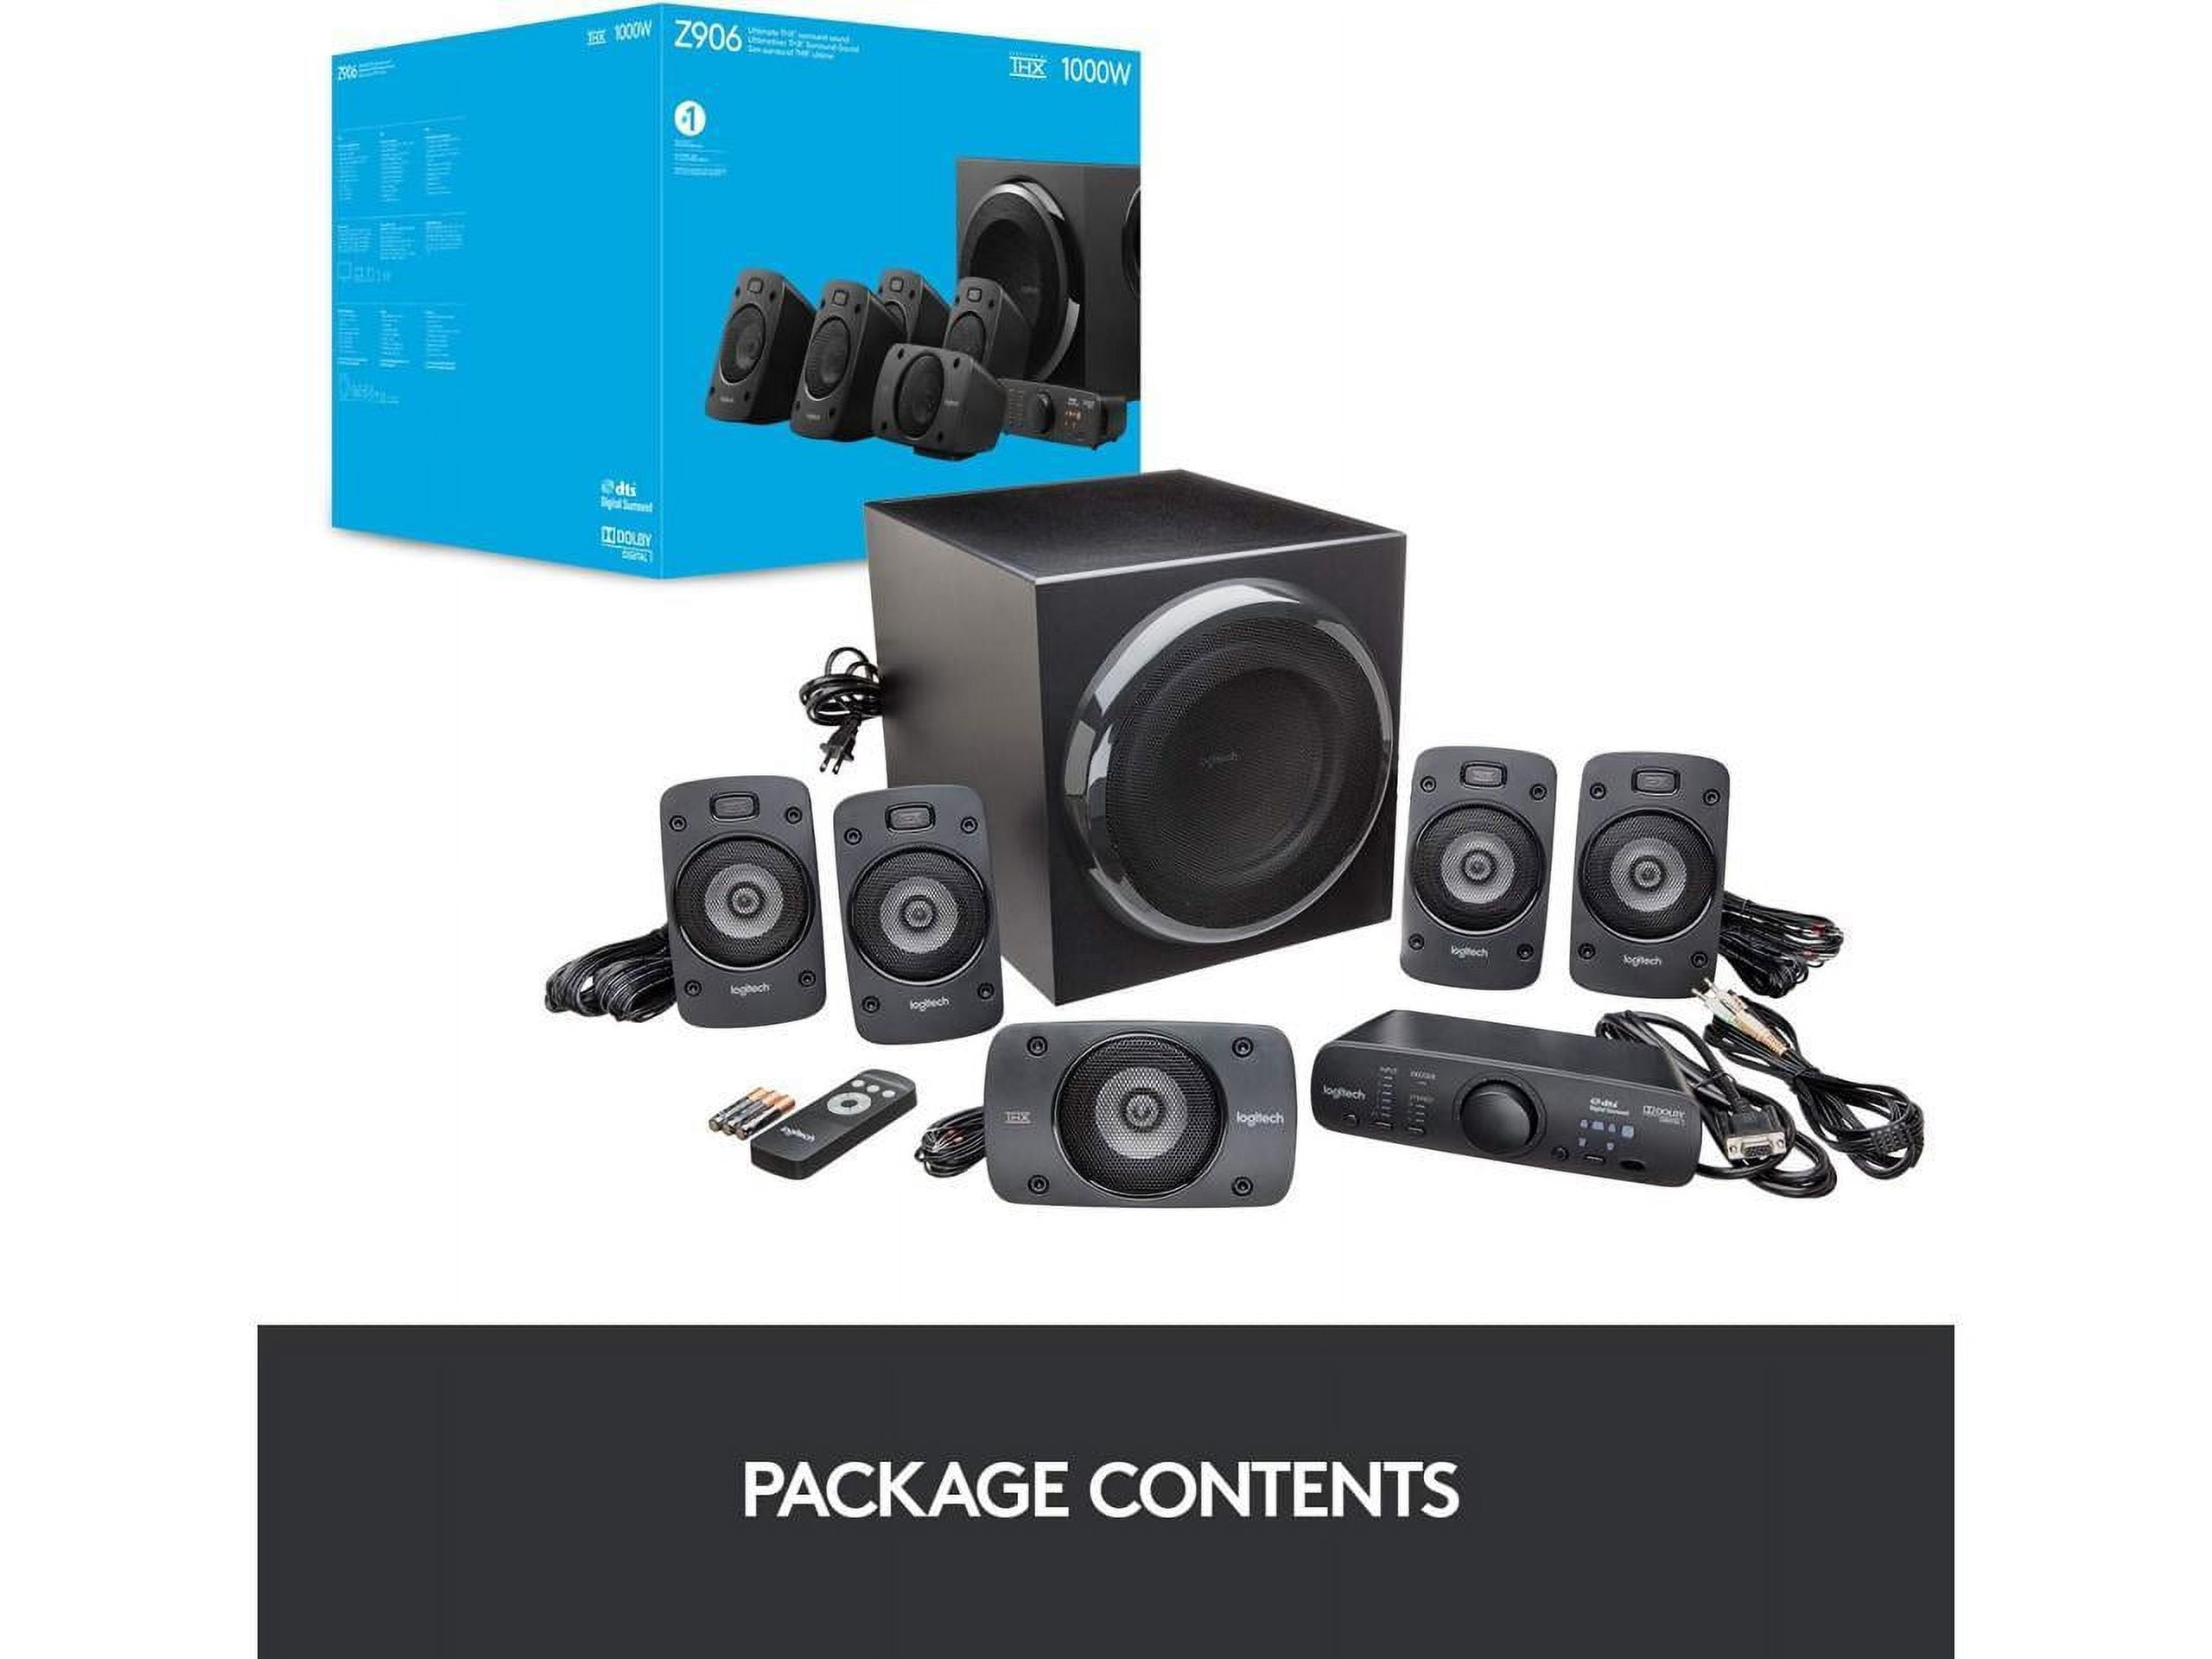 Logitech Speaker System Z906 500W 5.1 THX Digital + Adaptador de Audio  Bluetooth